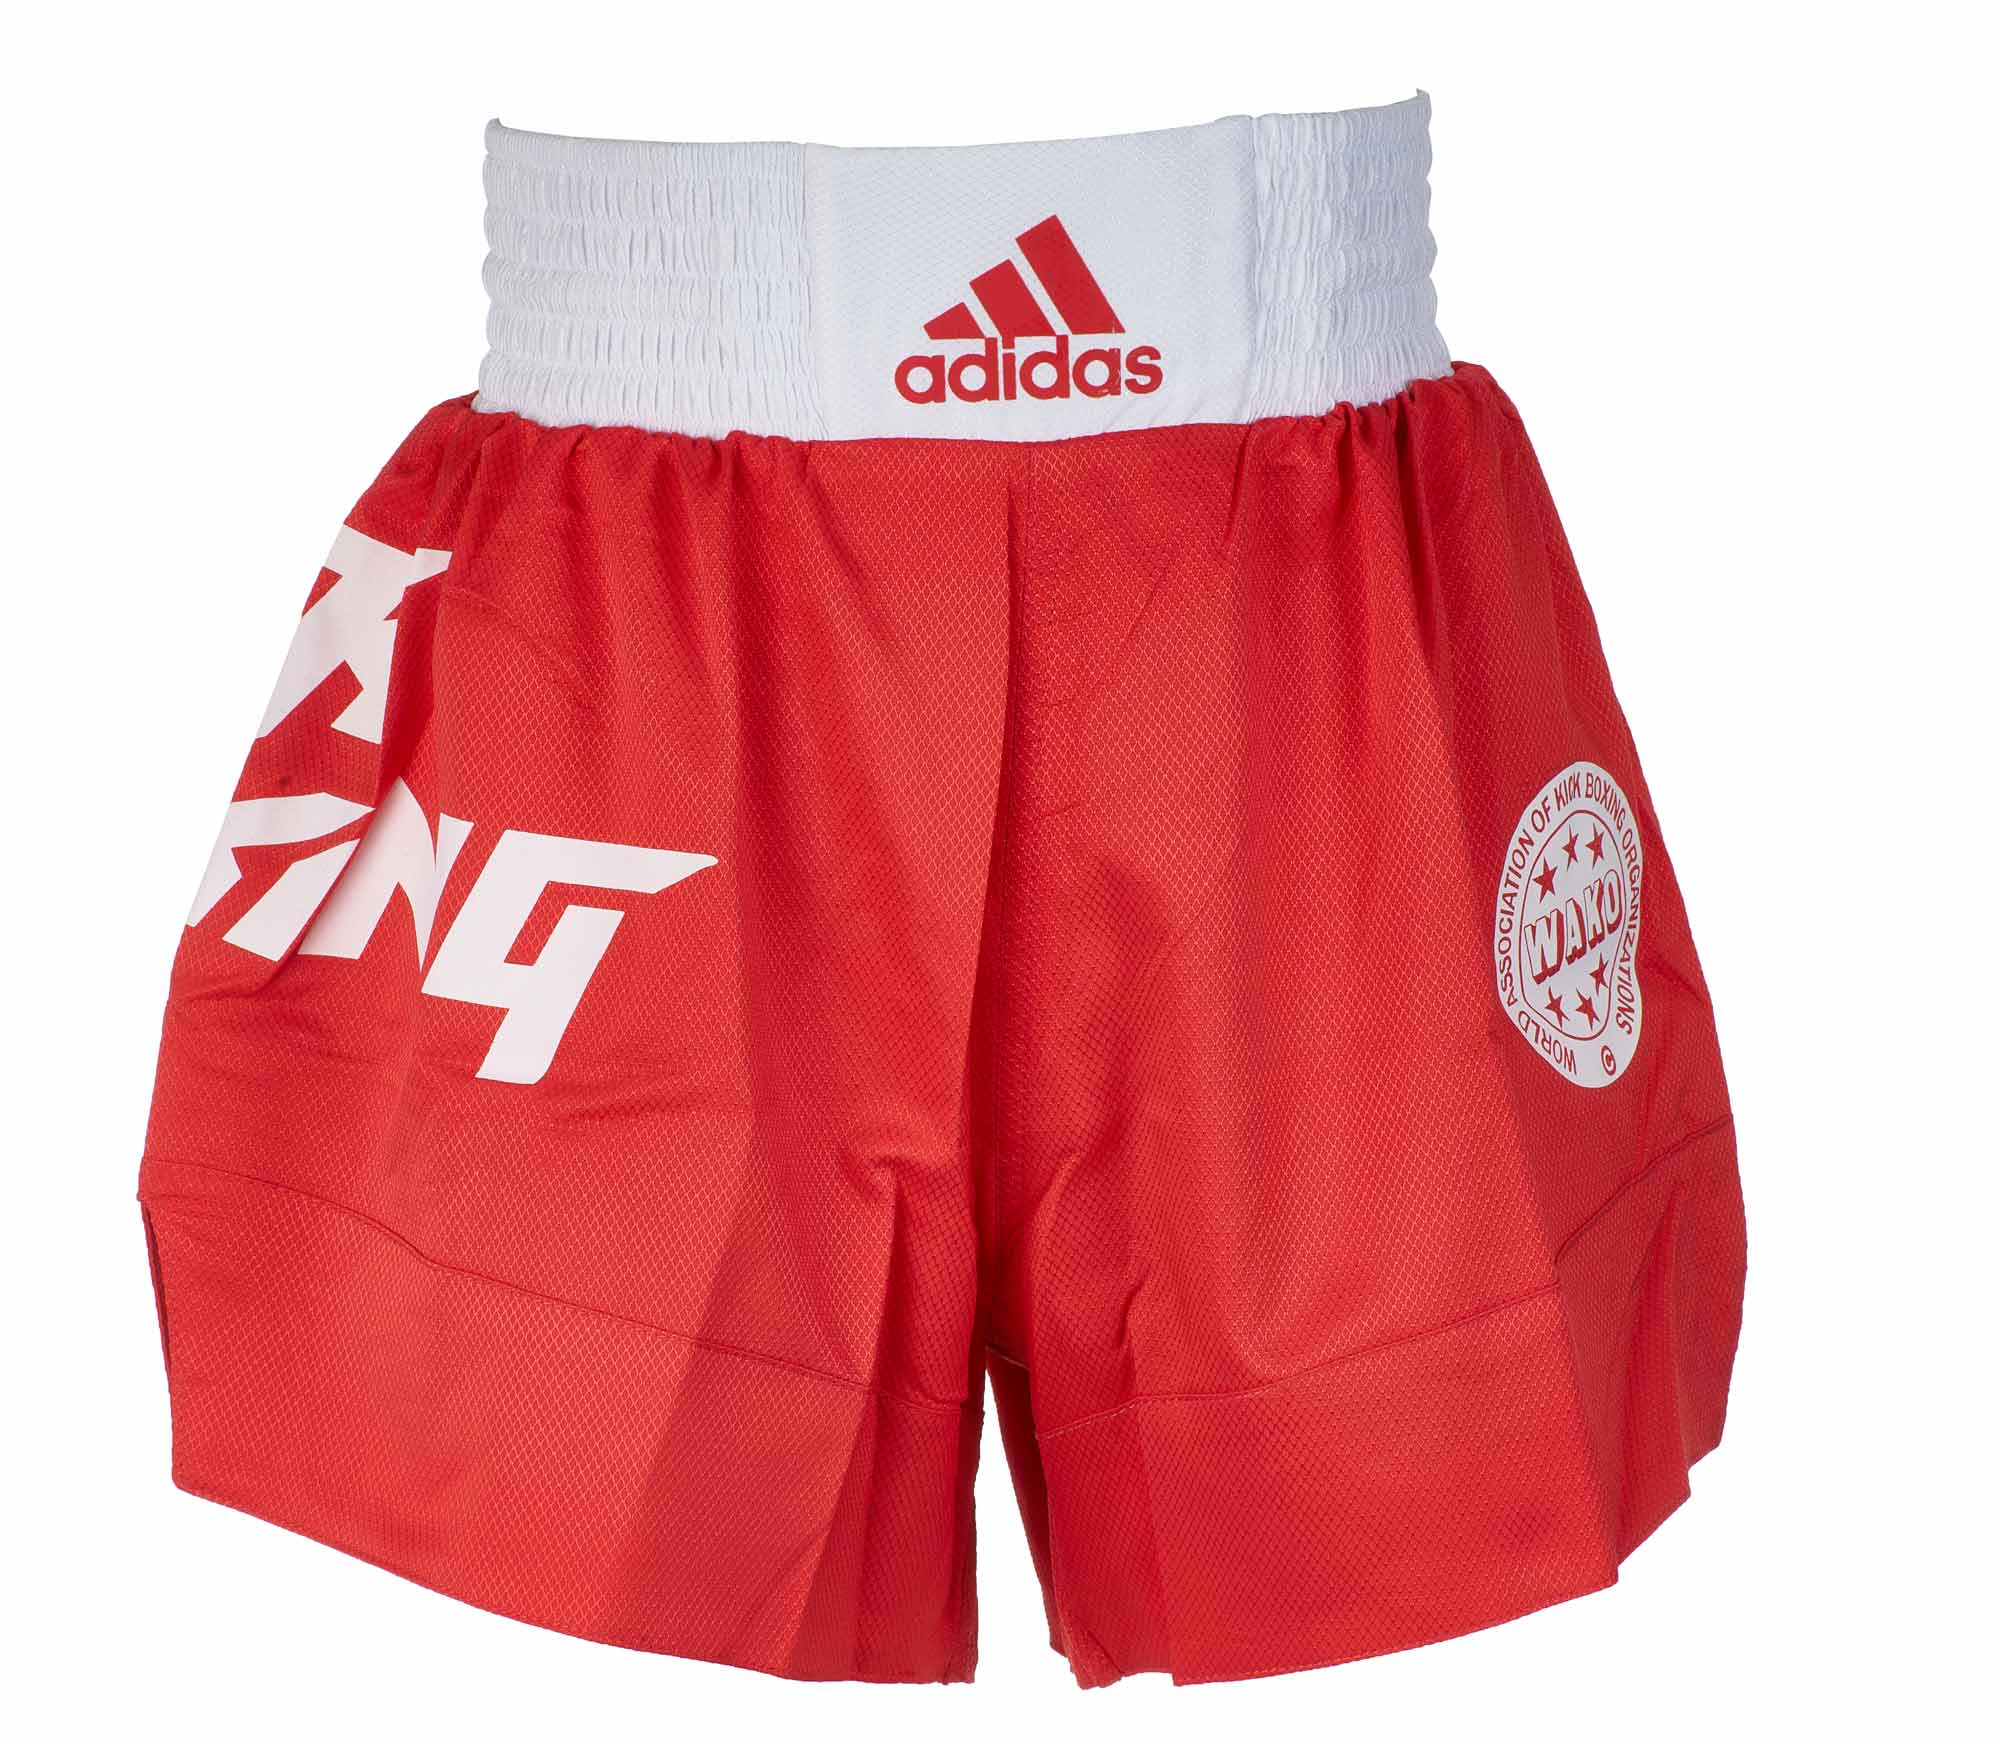 adidas Kick Boxing Shorts ADILKS1 red